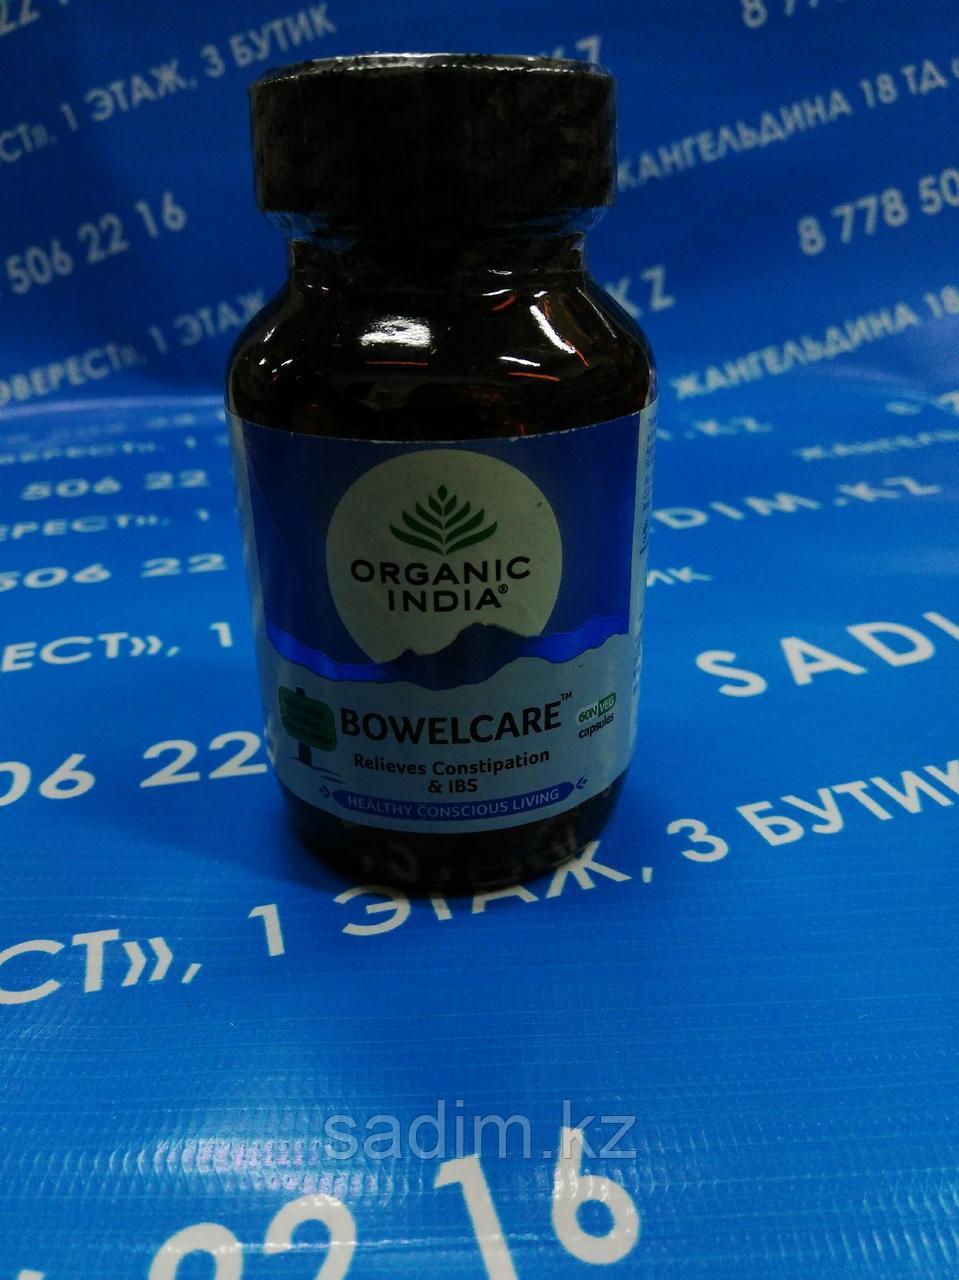 Bowelcare Organic India 60 капсул - снимает запоры и синдром раздраженного кишечника. Индия